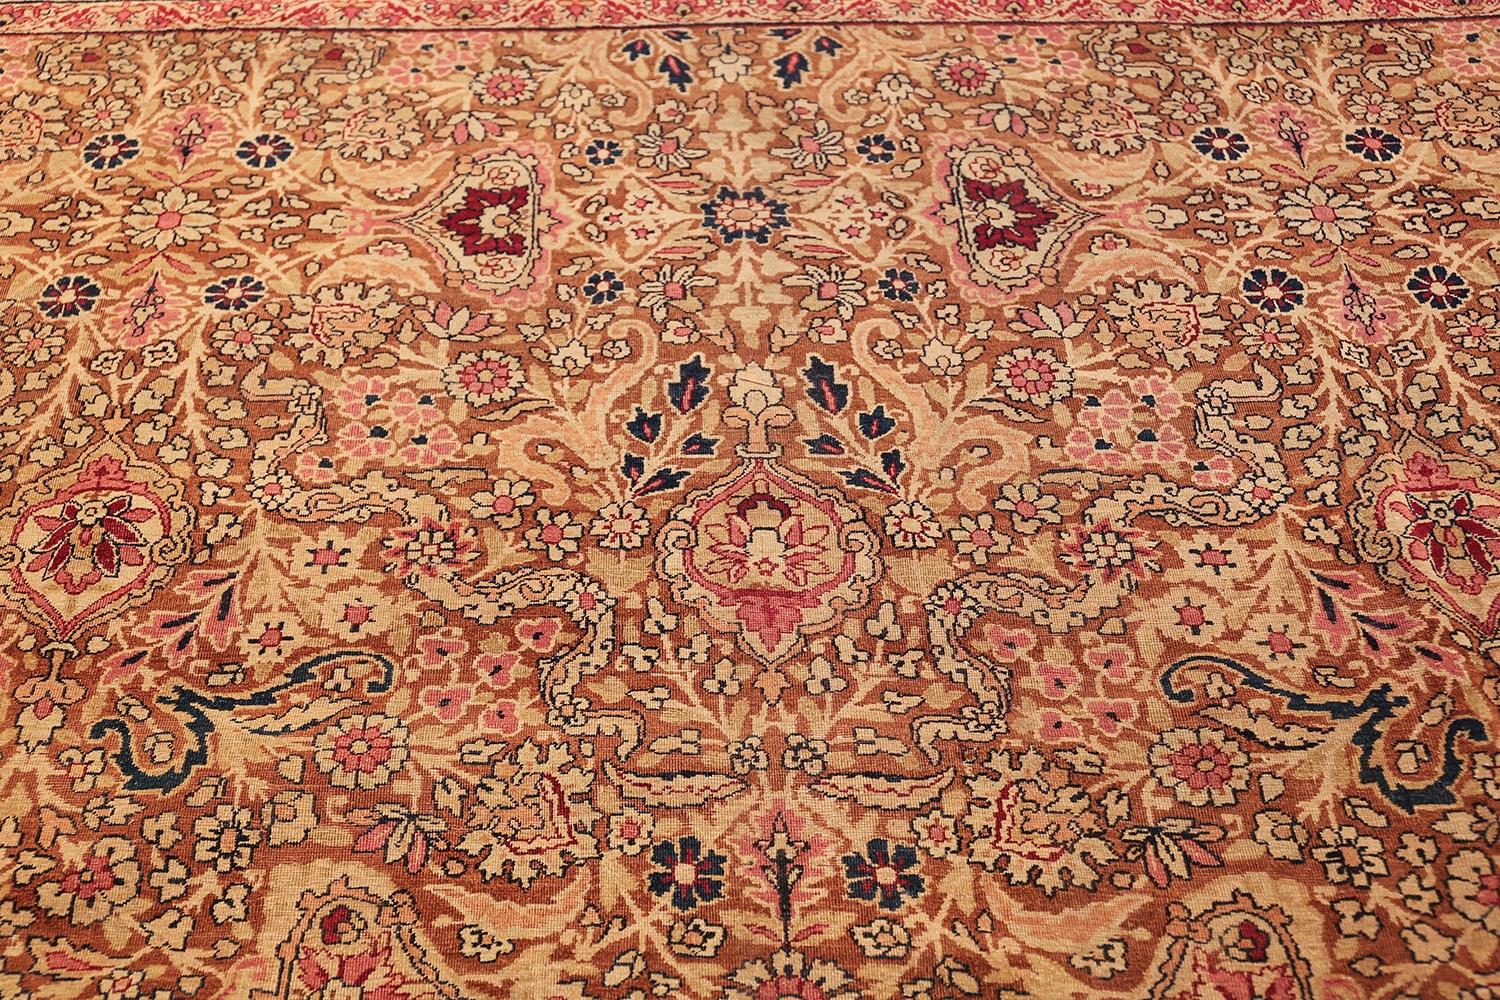 19th Century Antique Persian Kerman Carpet. Size: 11' 6